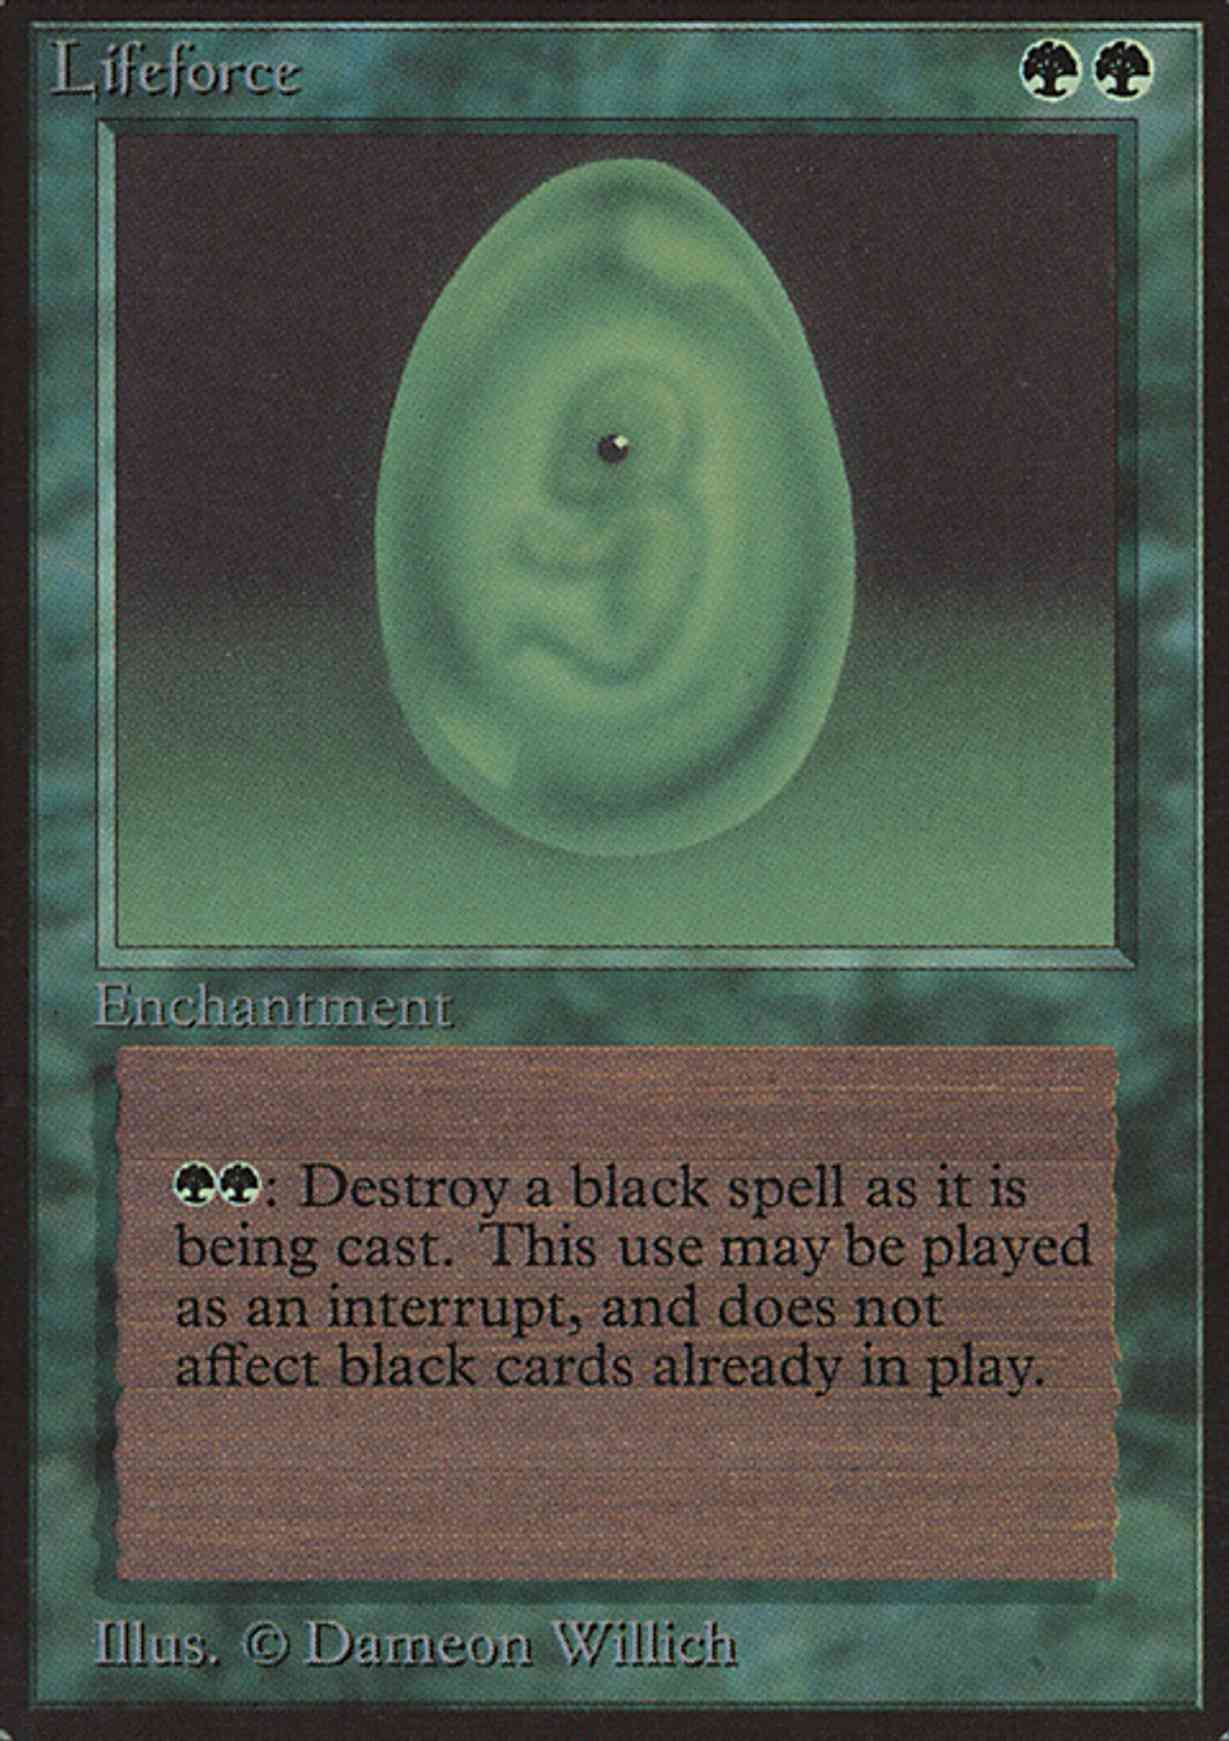 Lifeforce magic card front